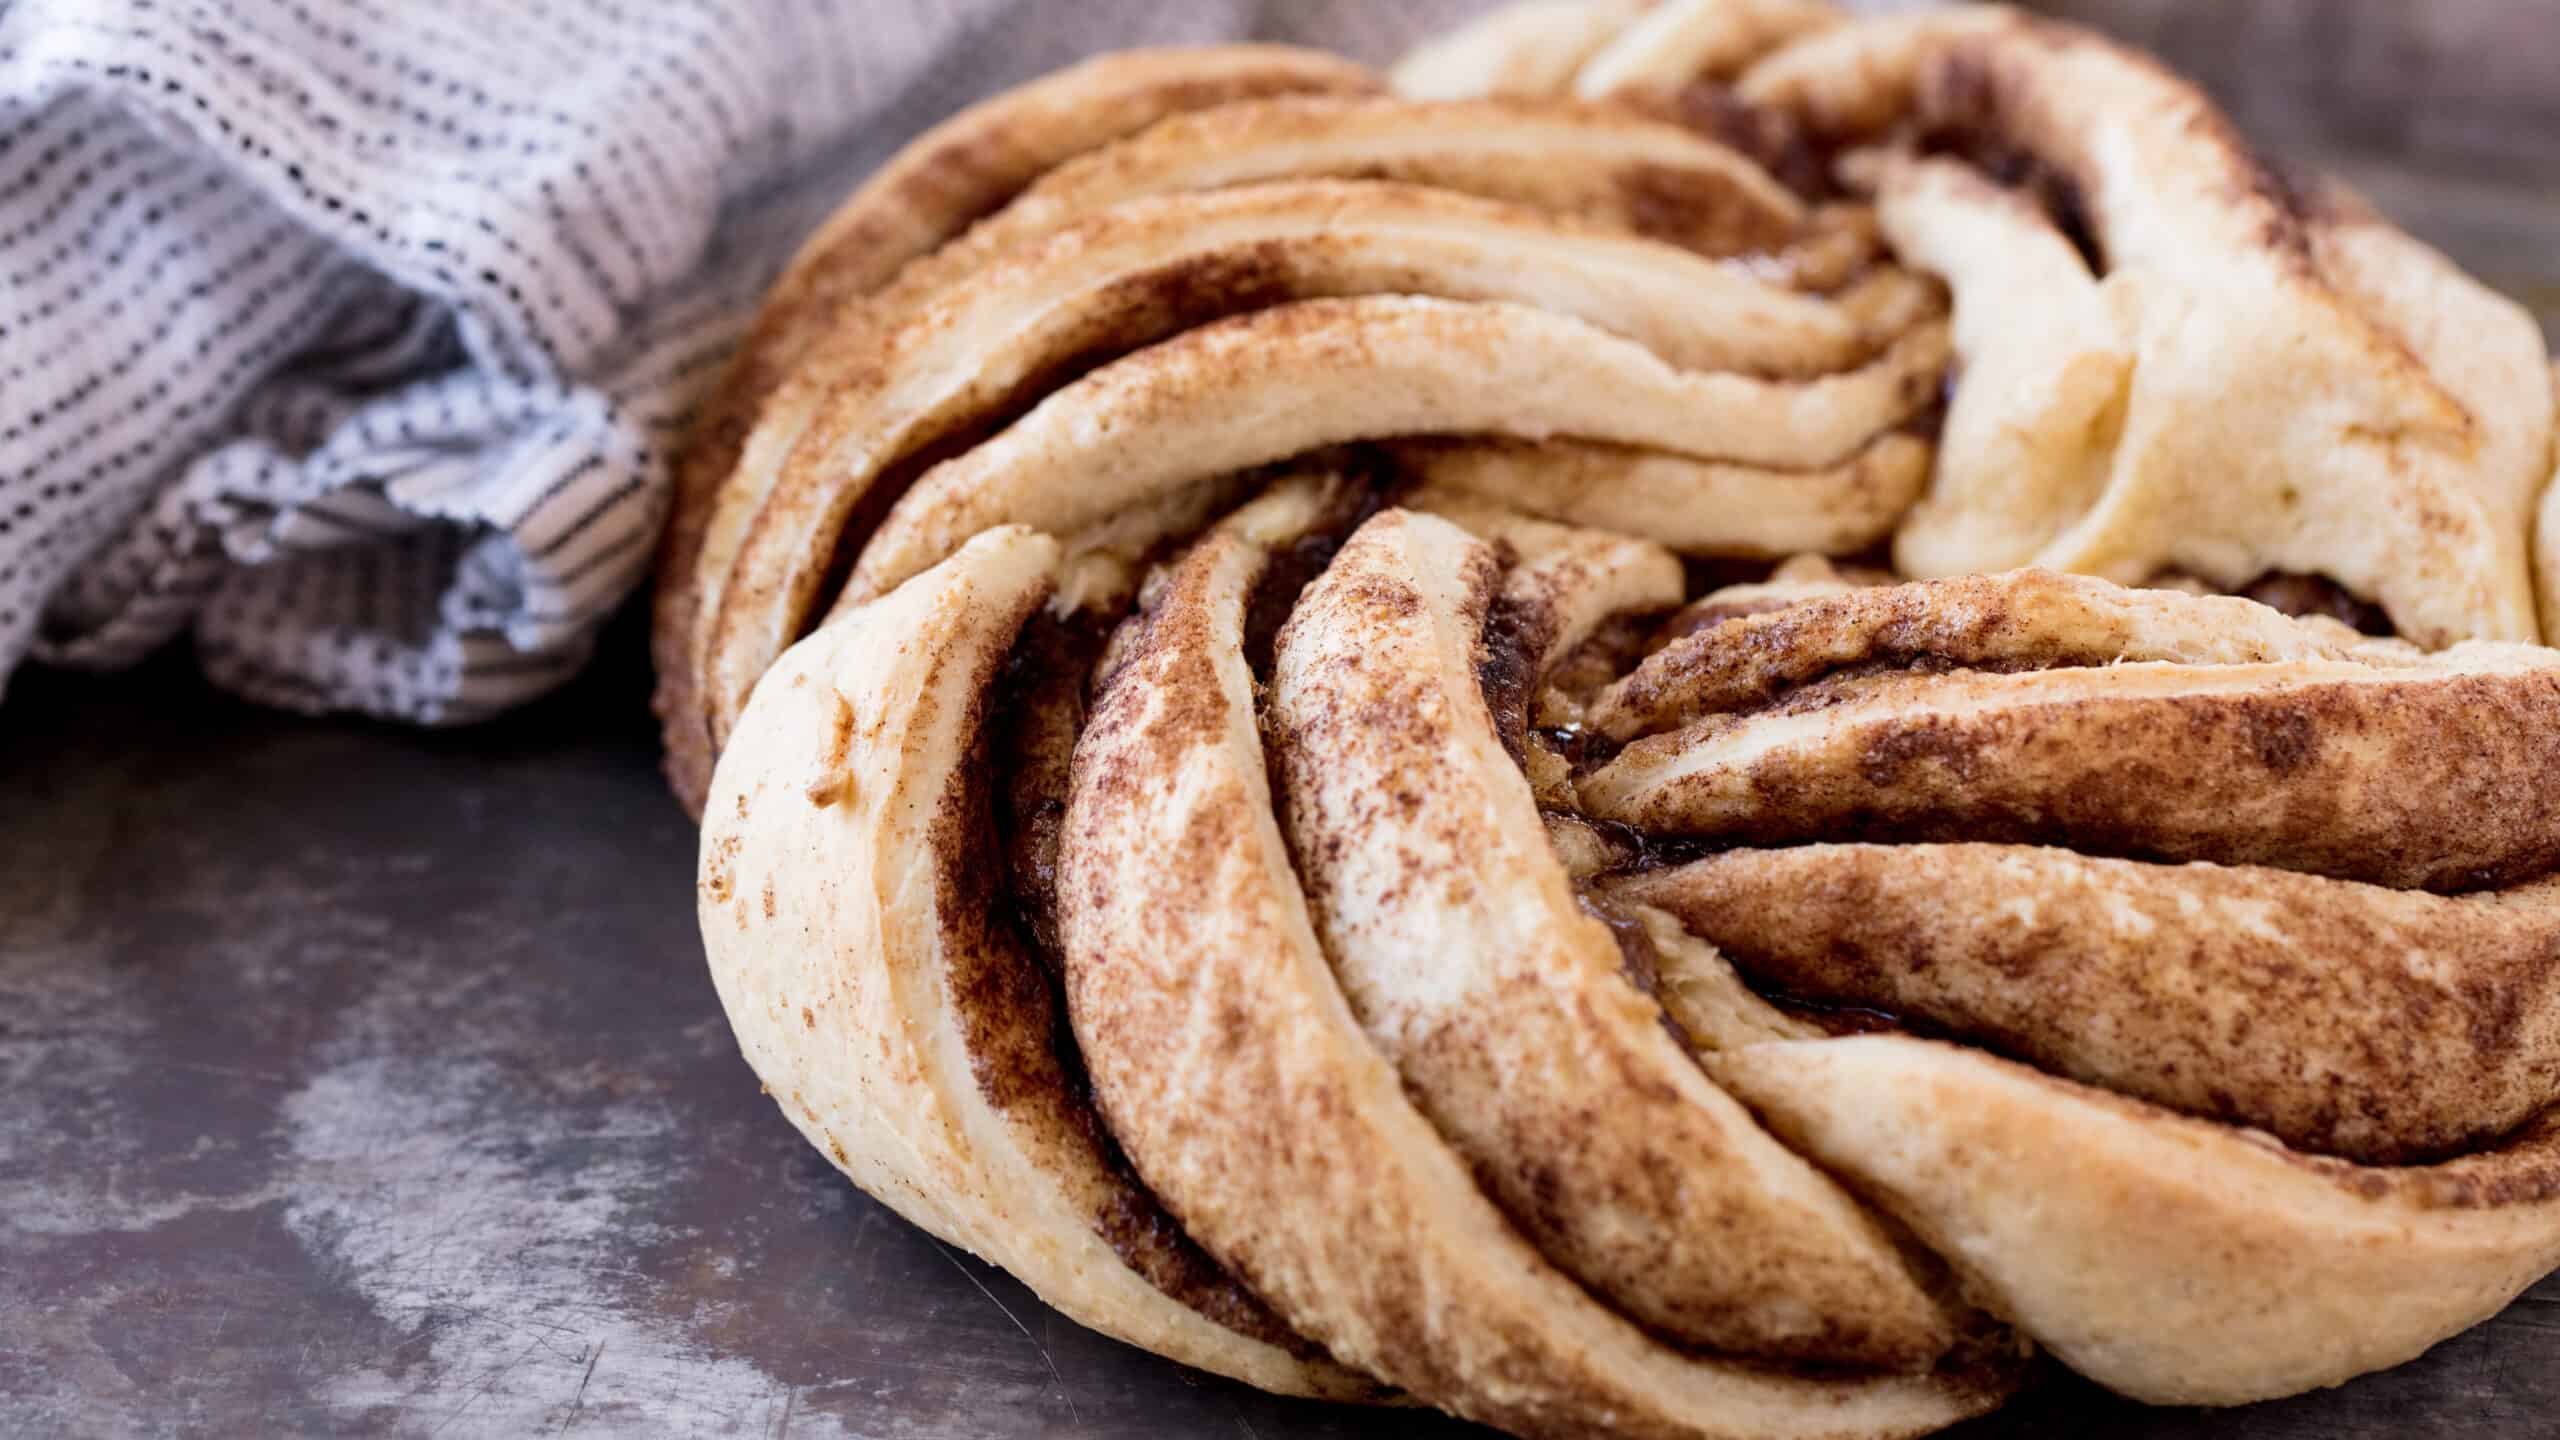 https://thestayathomechef.com/wp-content/uploads/2020/05/Cinnamon-Roll-Twist-Bread-2-scaled.jpg